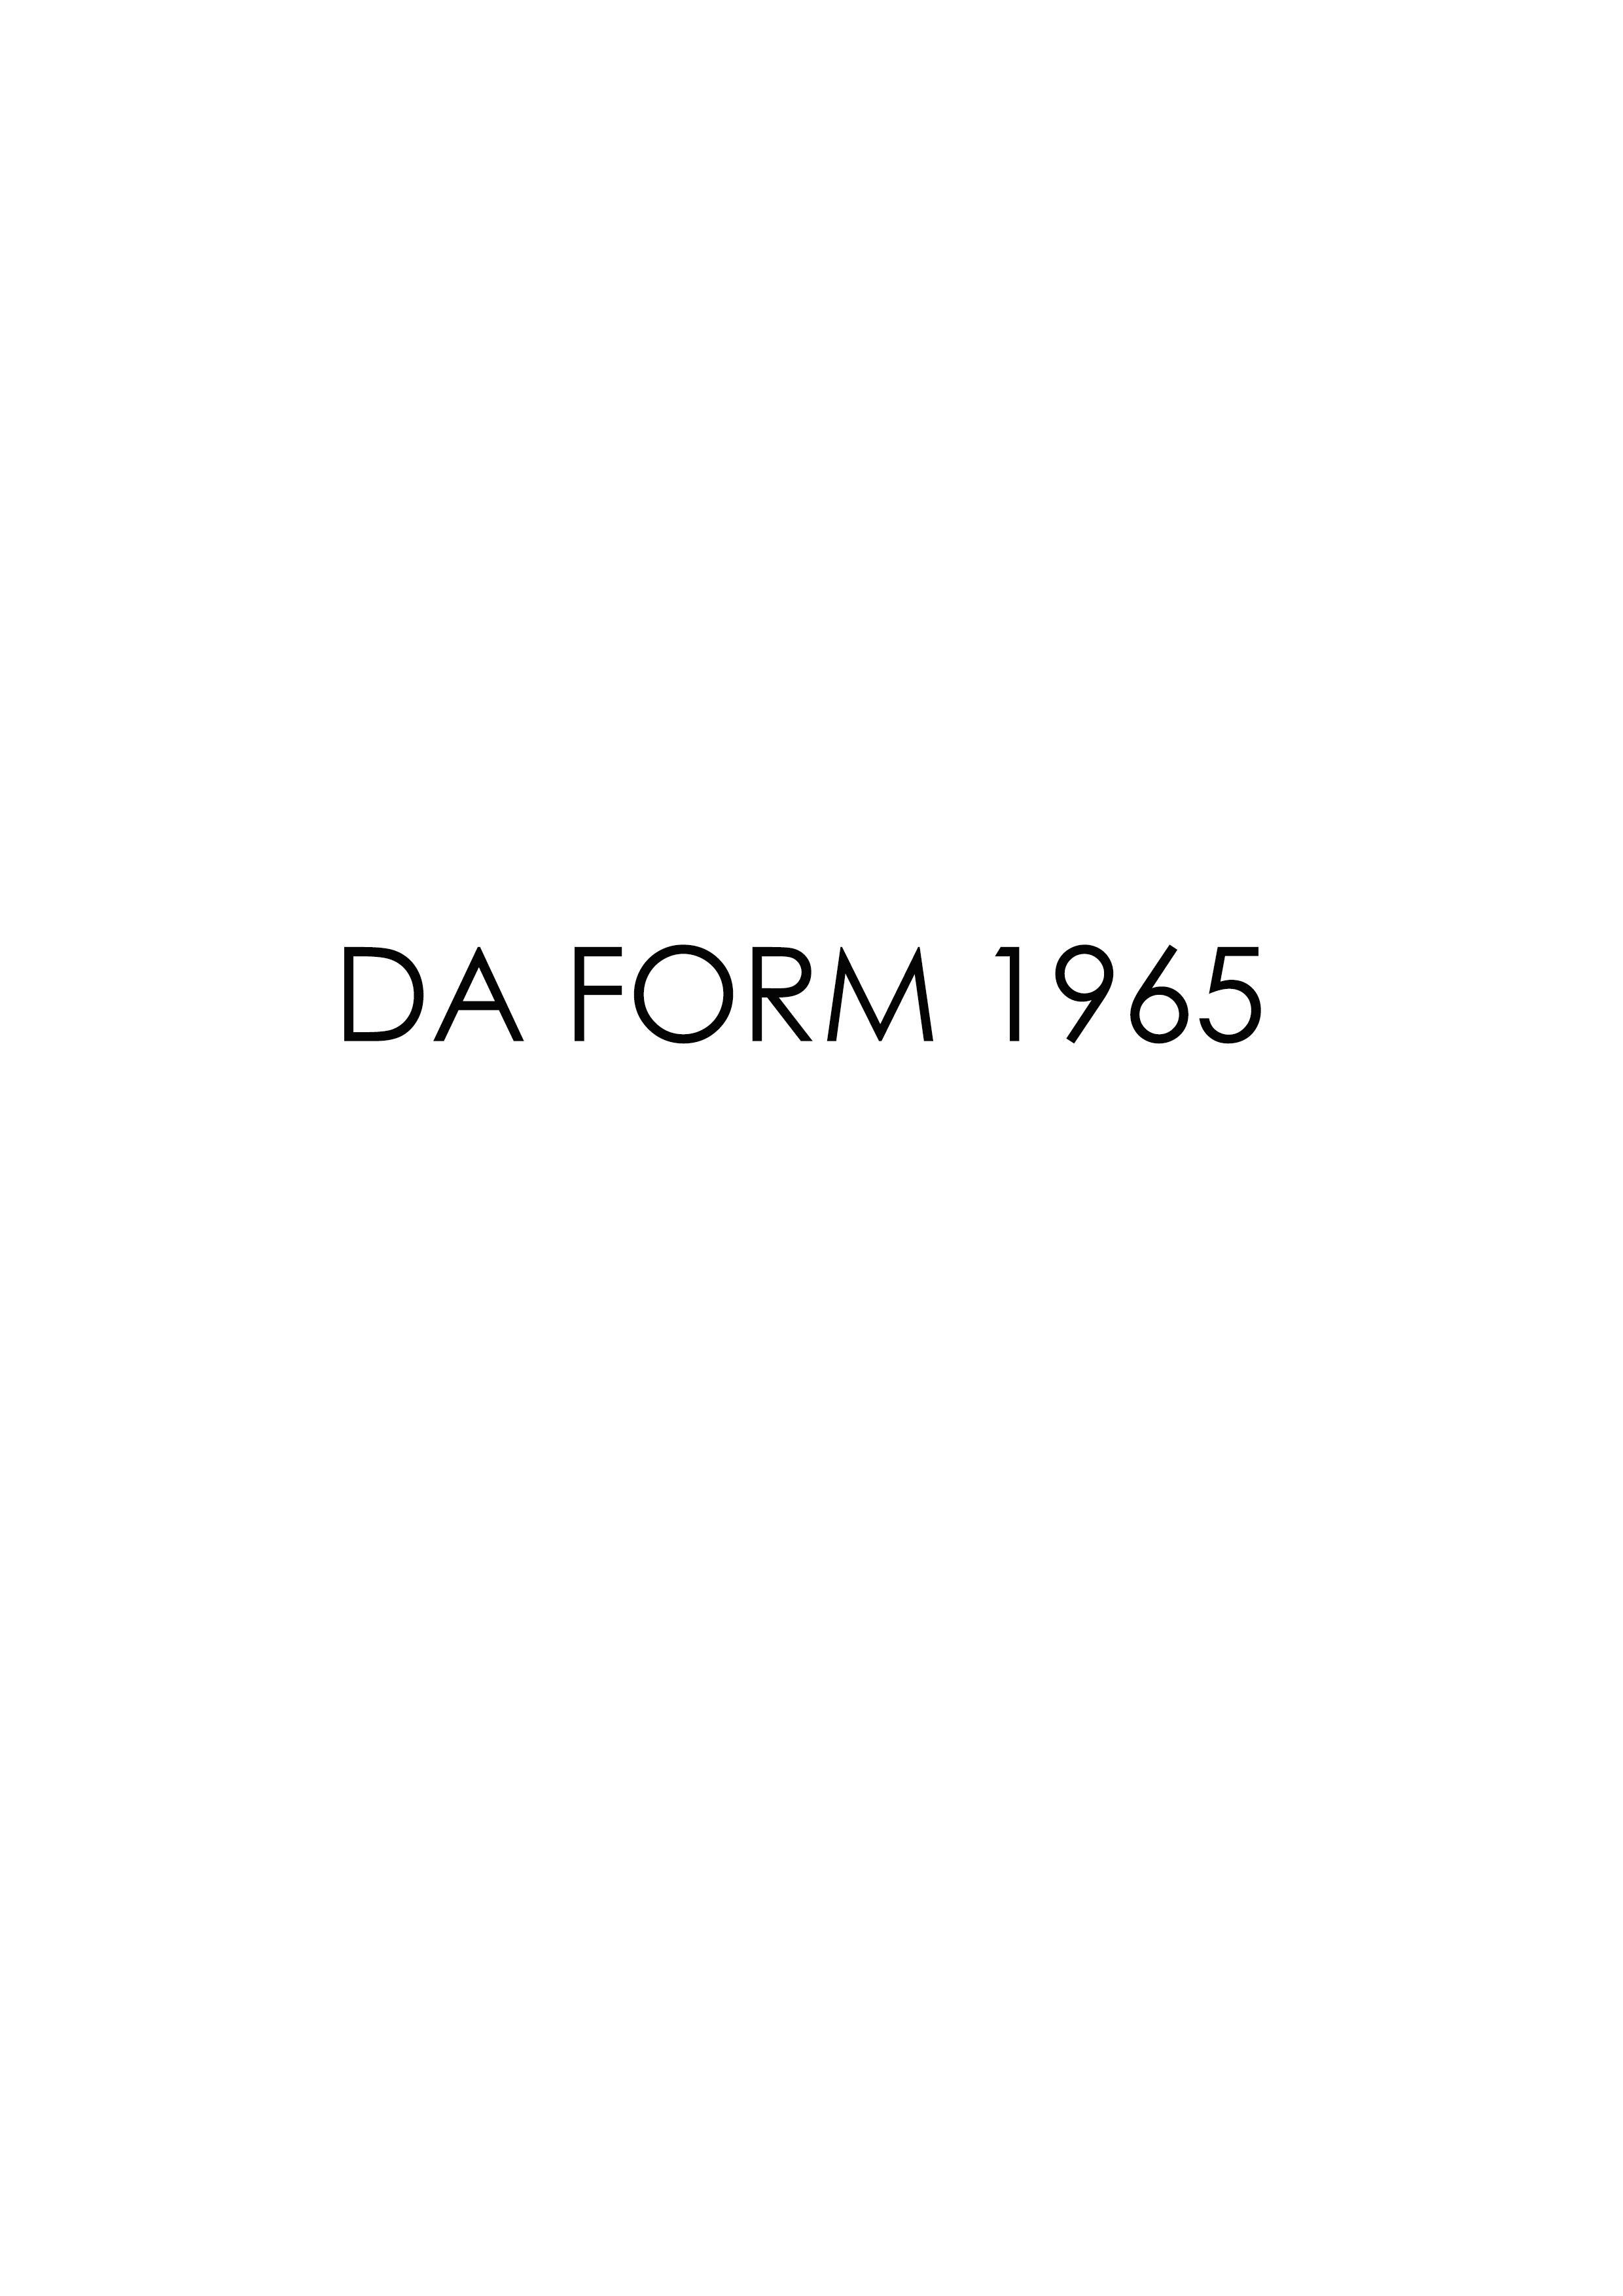 Download da 1965 Form Free